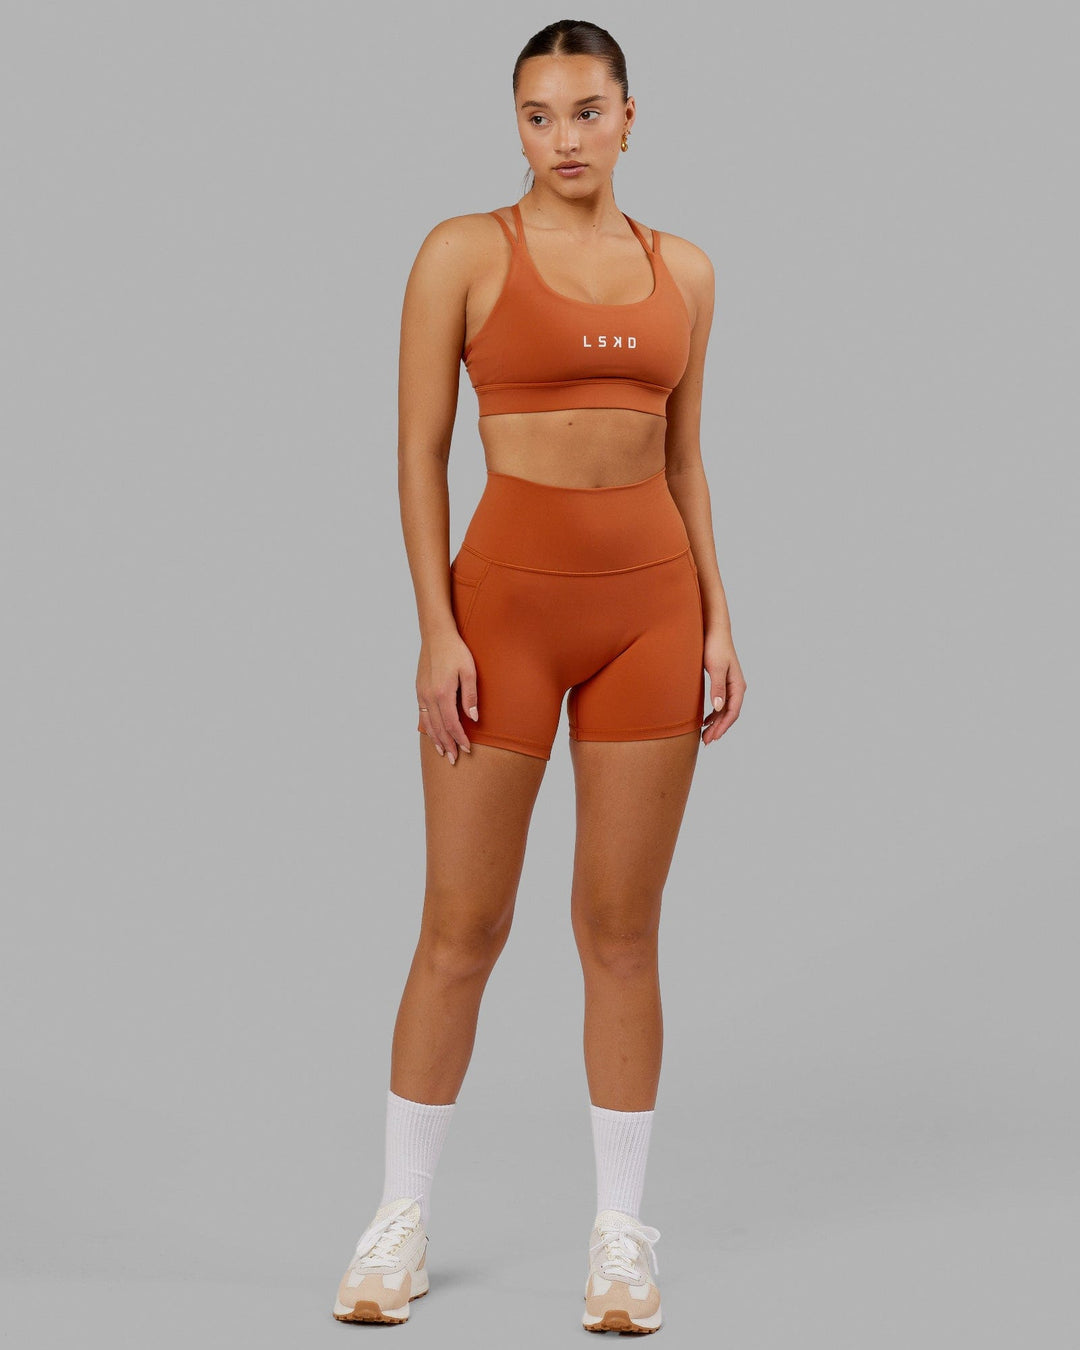 Woman wearing Fusion X-Short Tight - Auburn